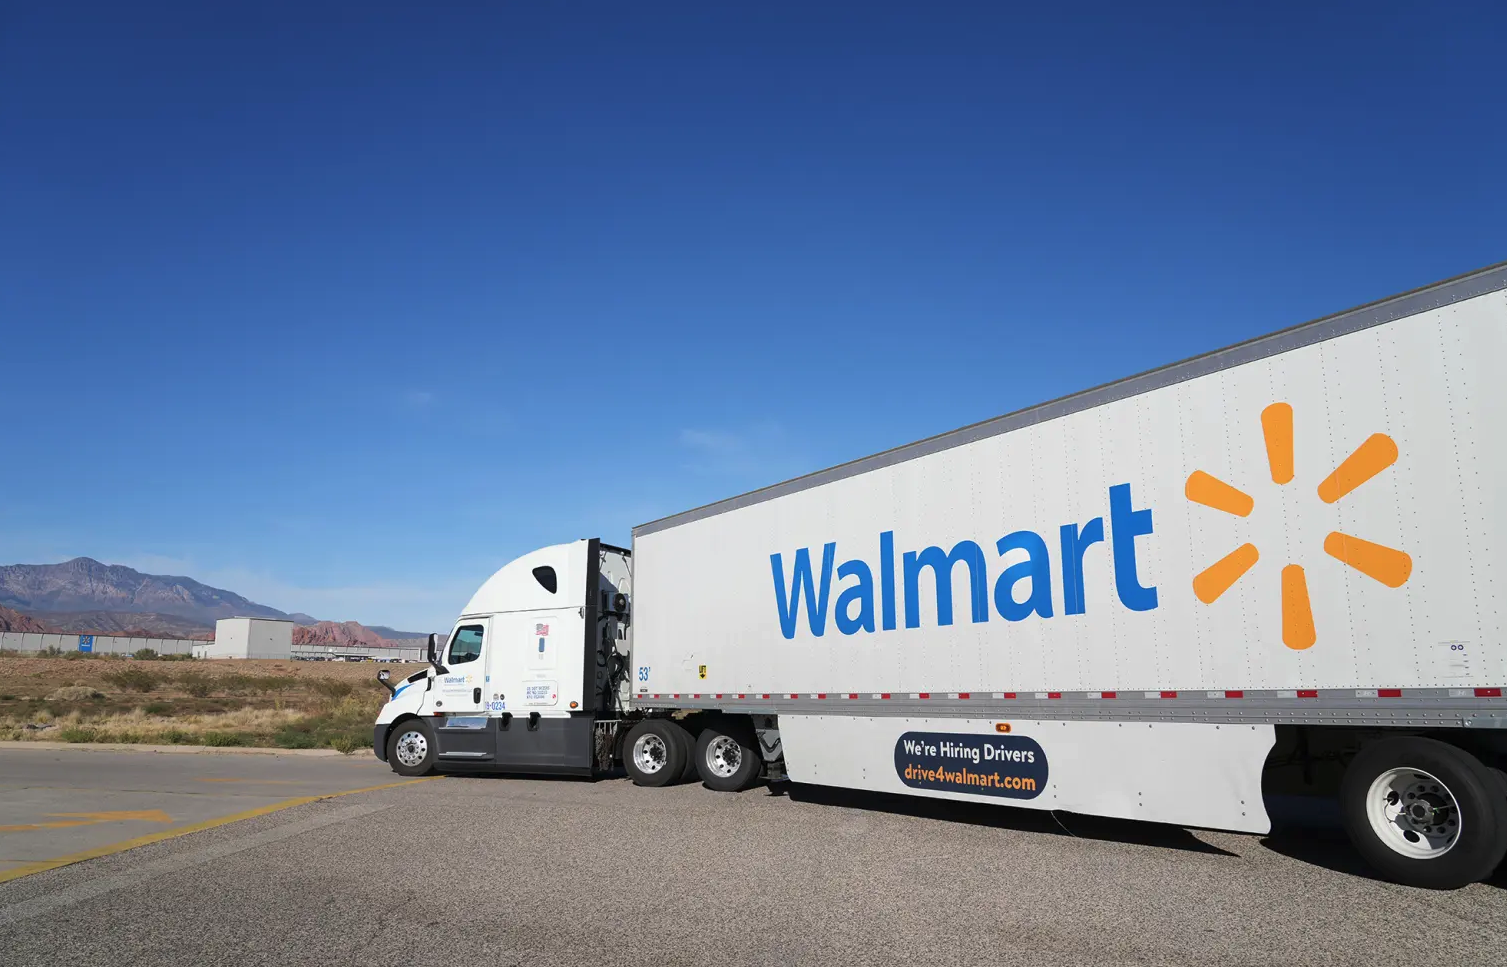 Walmart Truck - third-party sellers can offer their goods through Walmart's website.